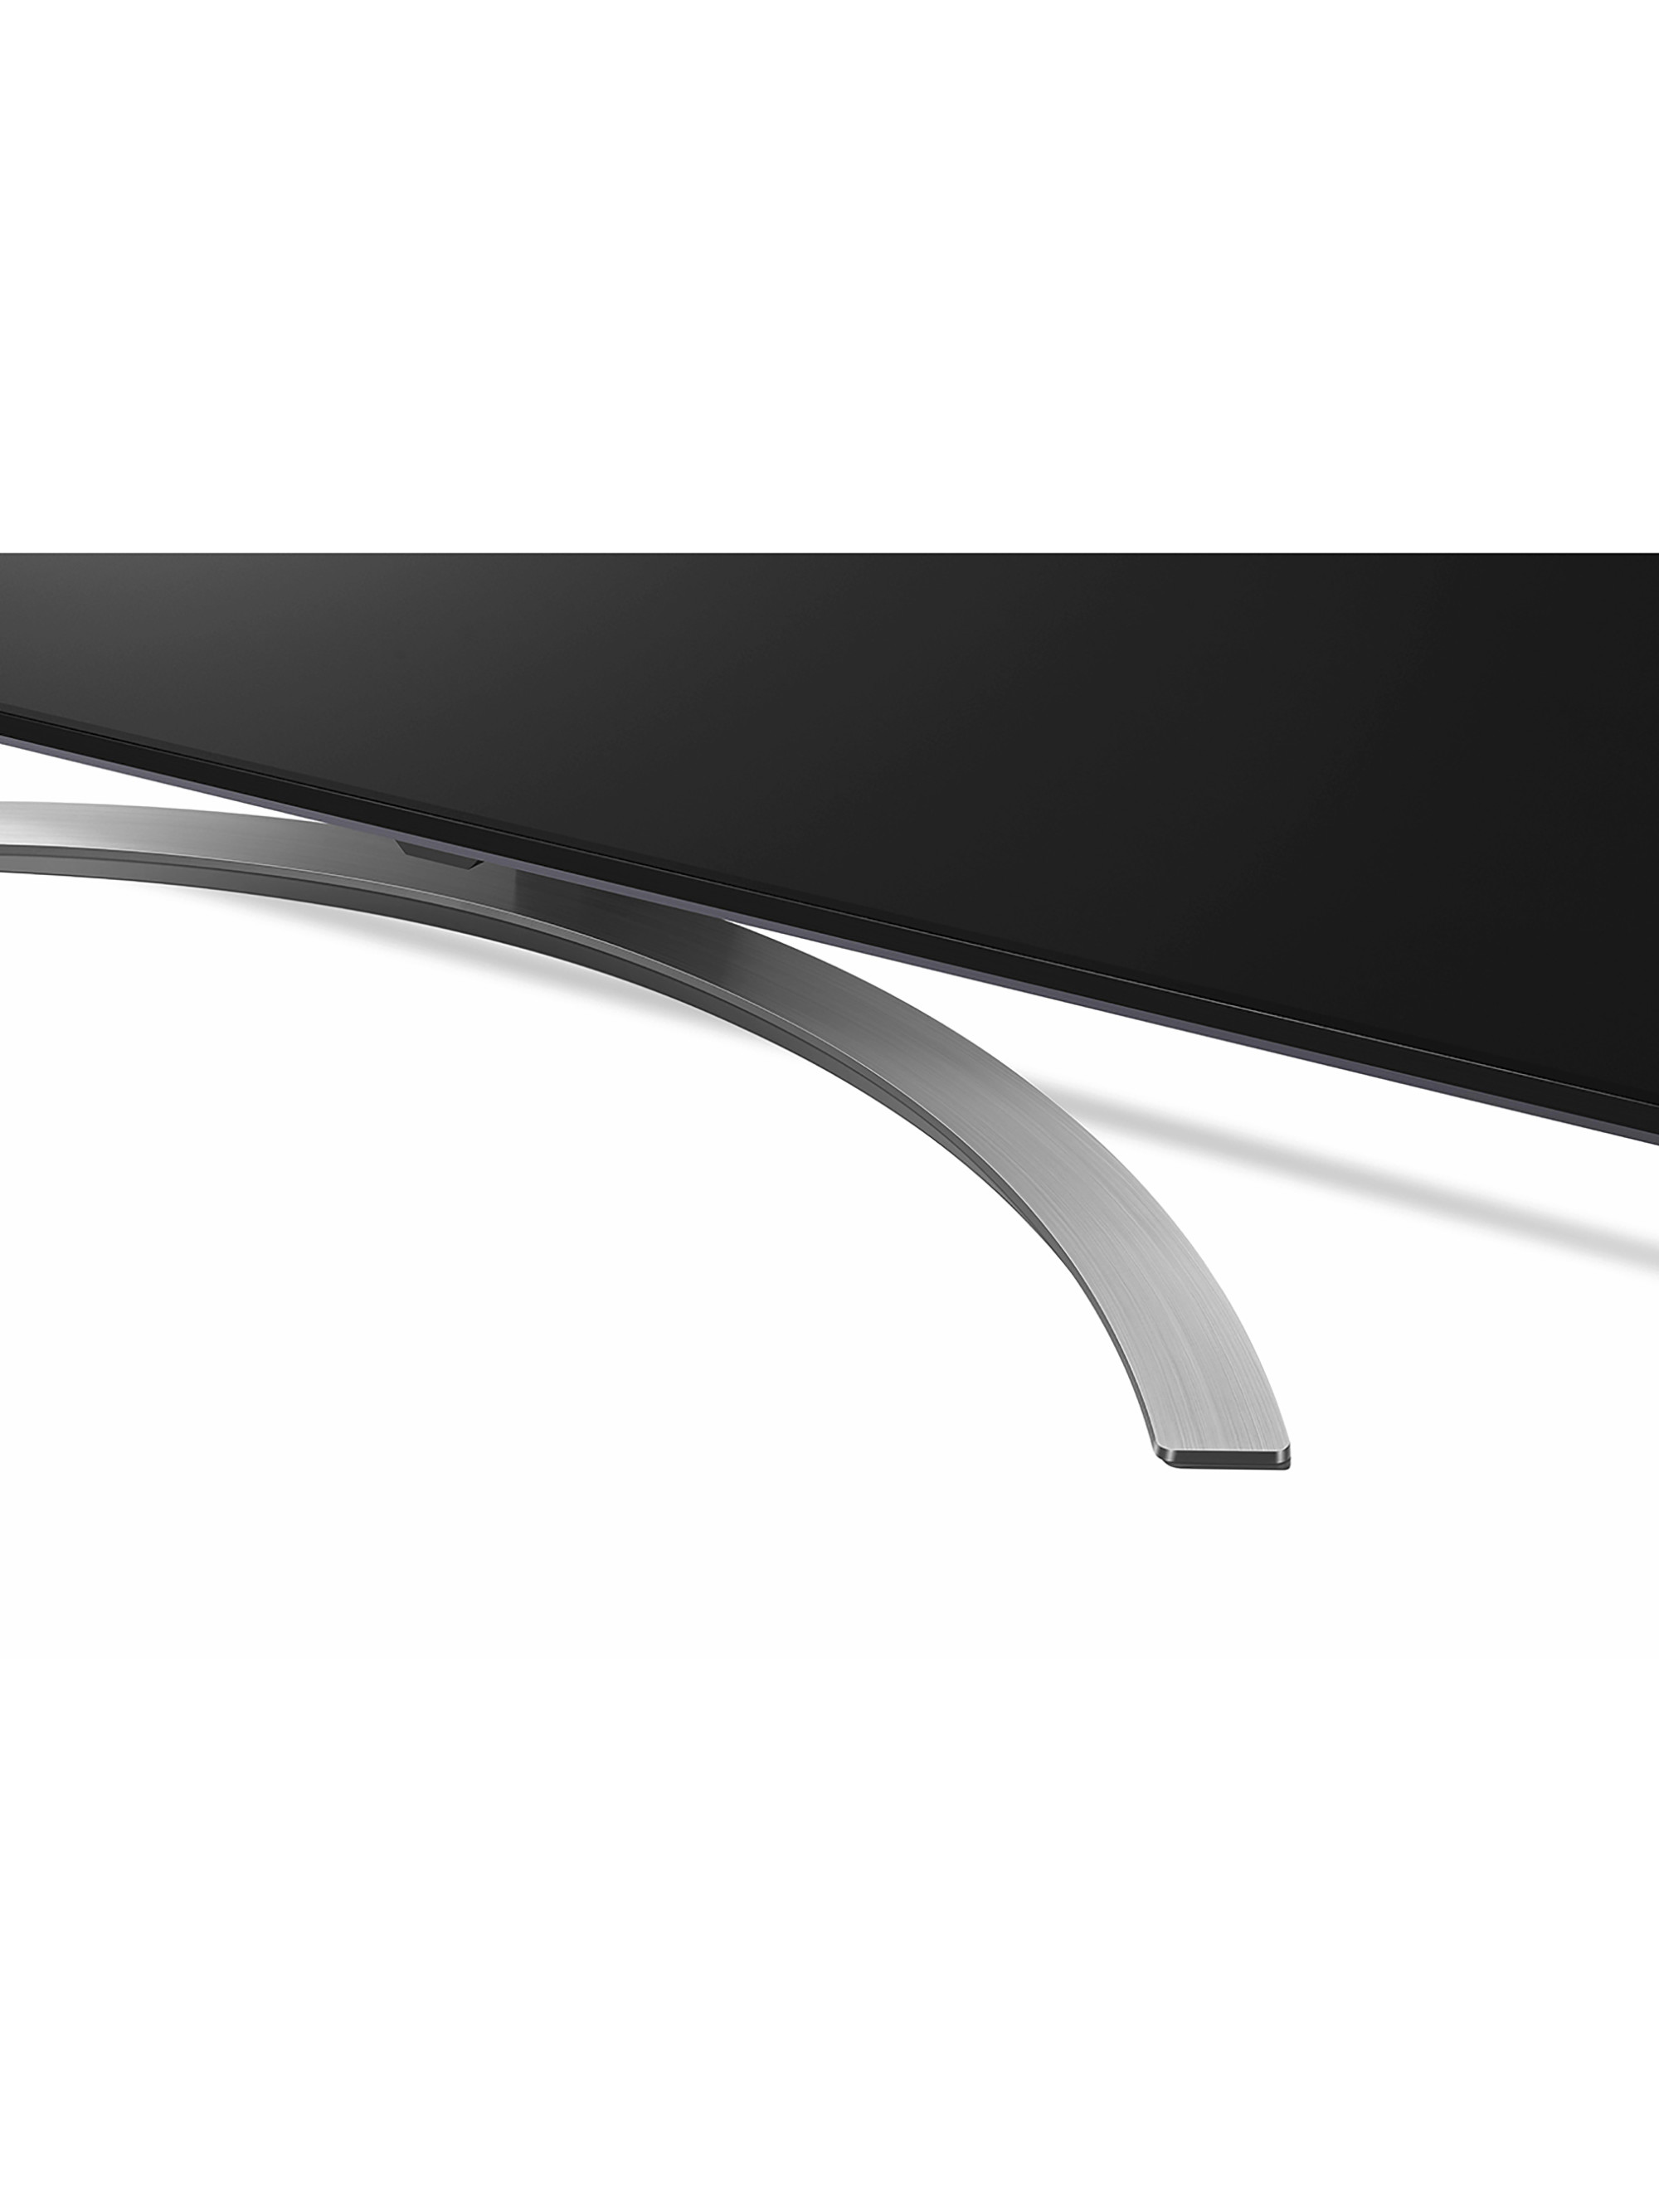 LG 55'' LED HDR Nano Cell 4k Ultra HD Smart TV (2021) 55NANO886PB | Fenwick